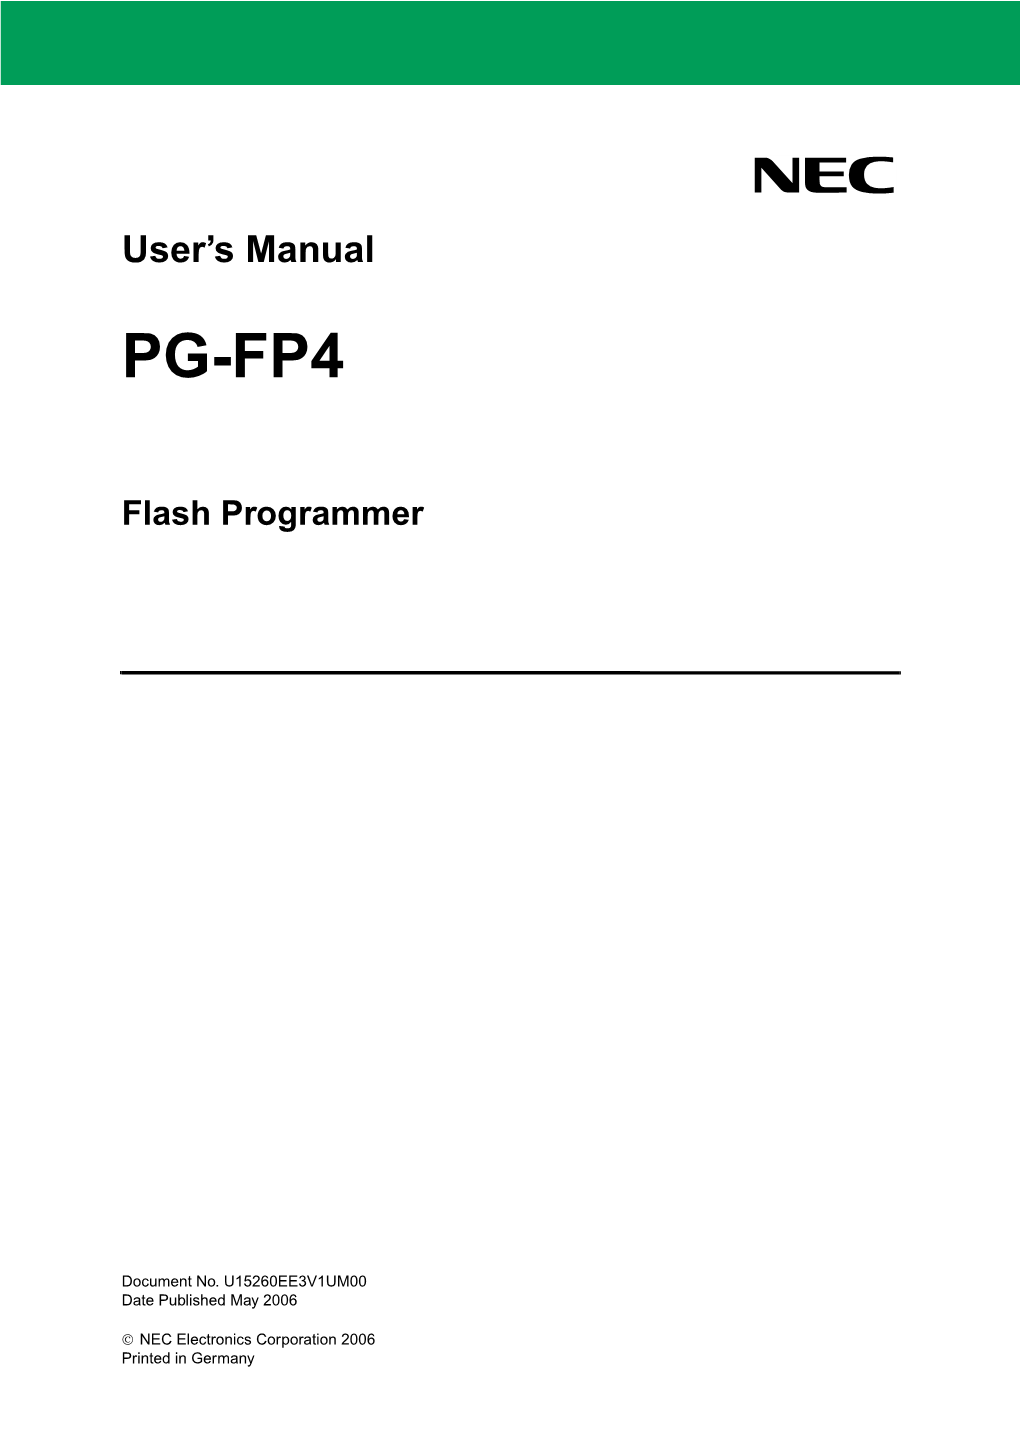 PG-FP4 Flash Programmer User's Manual